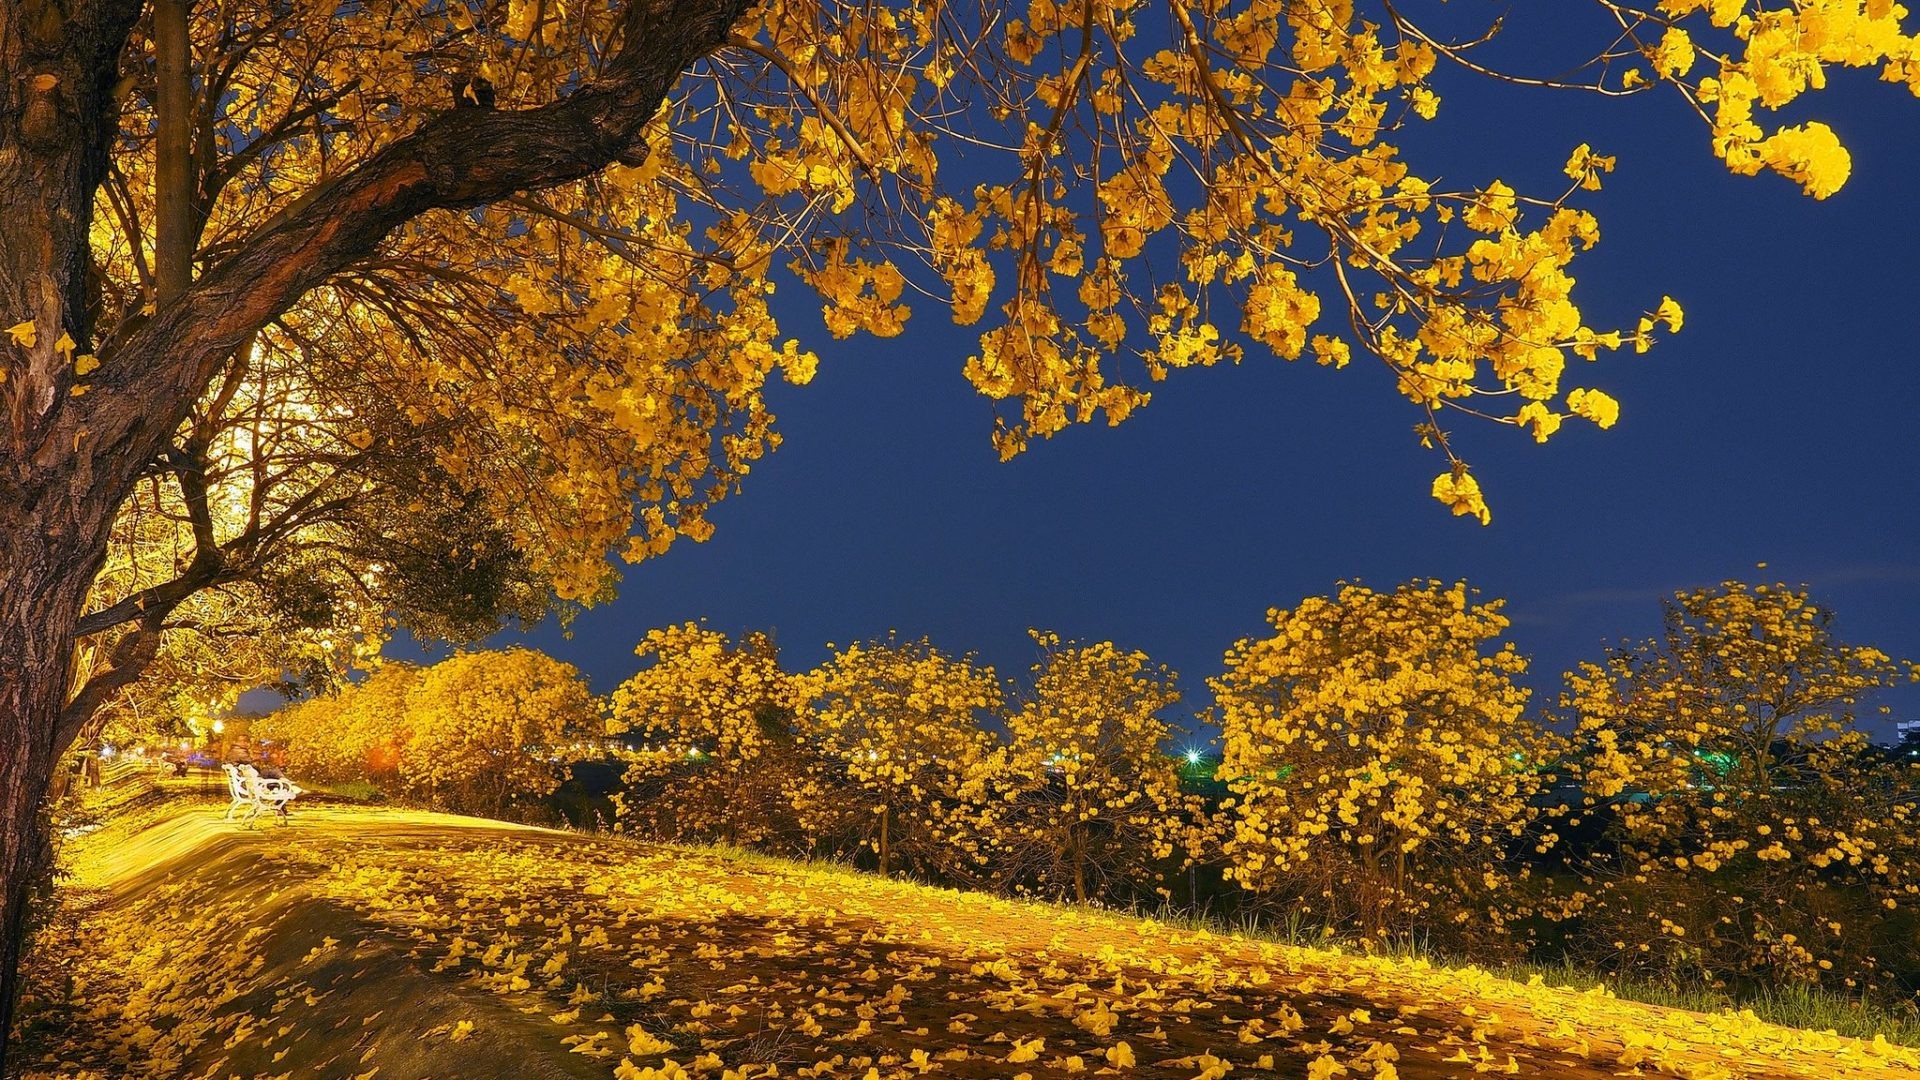 Romantic Tag – Falling Nature Night Yellow Trees Sky Tree Autumn Leaves  Tonight Park Landscape Fall